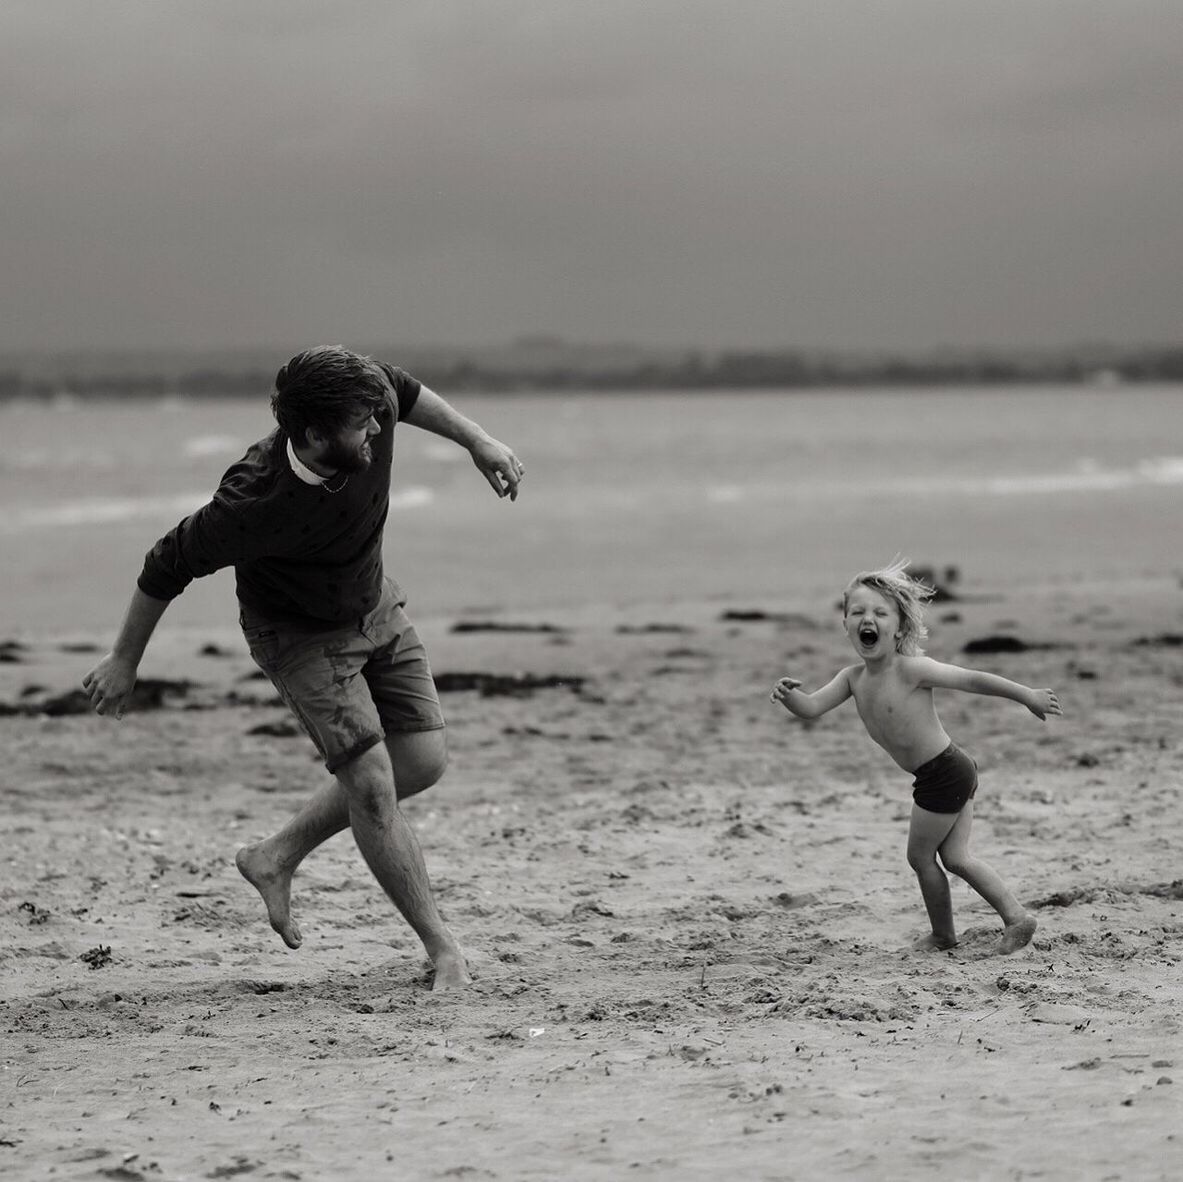 FULL LENGTH OF BOY PLAYING ON BEACH